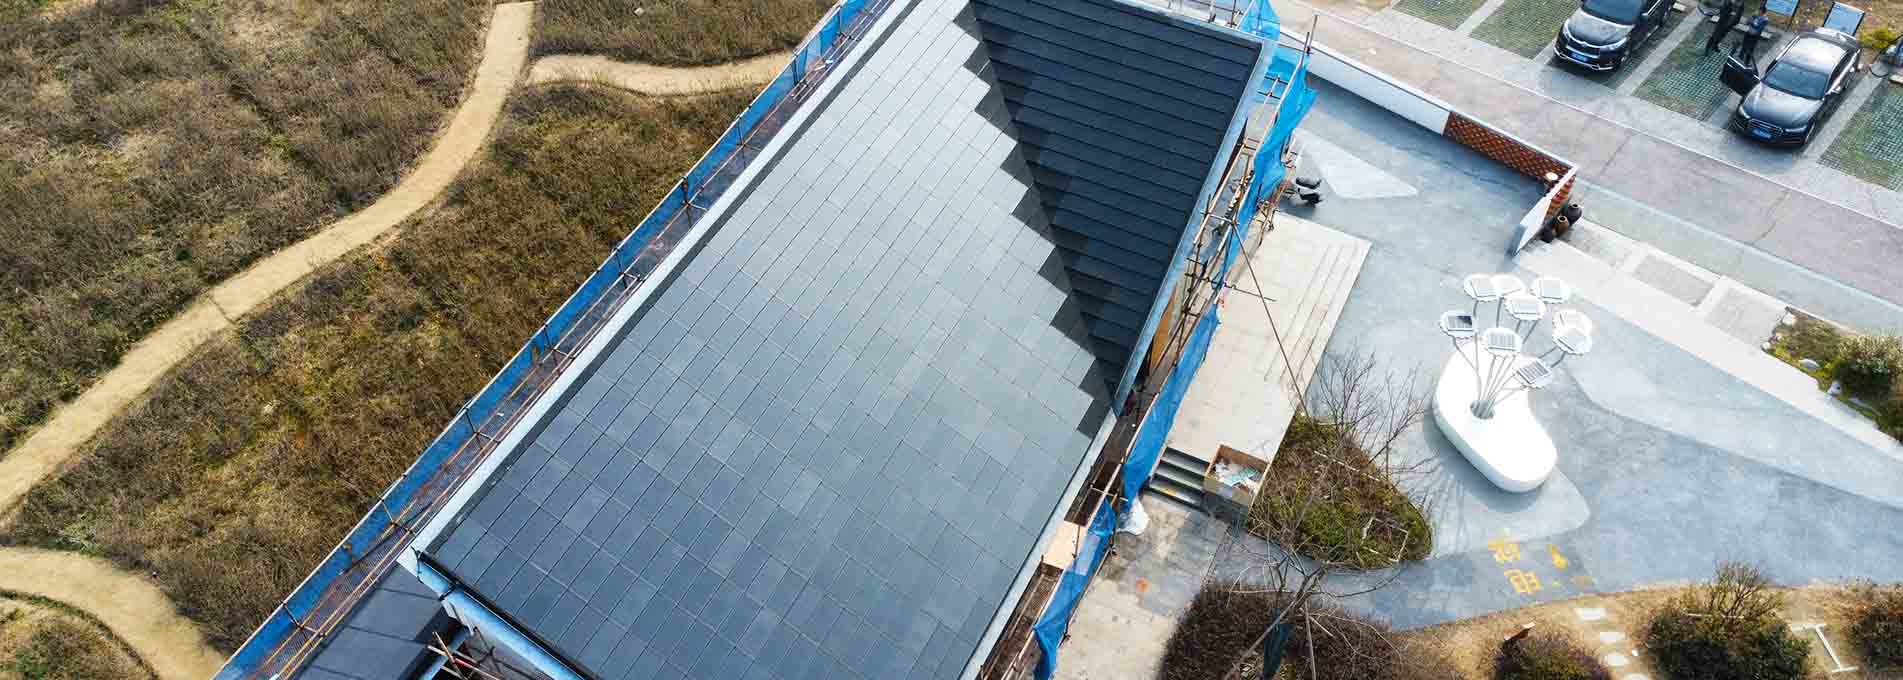 Solar panel roof tiles